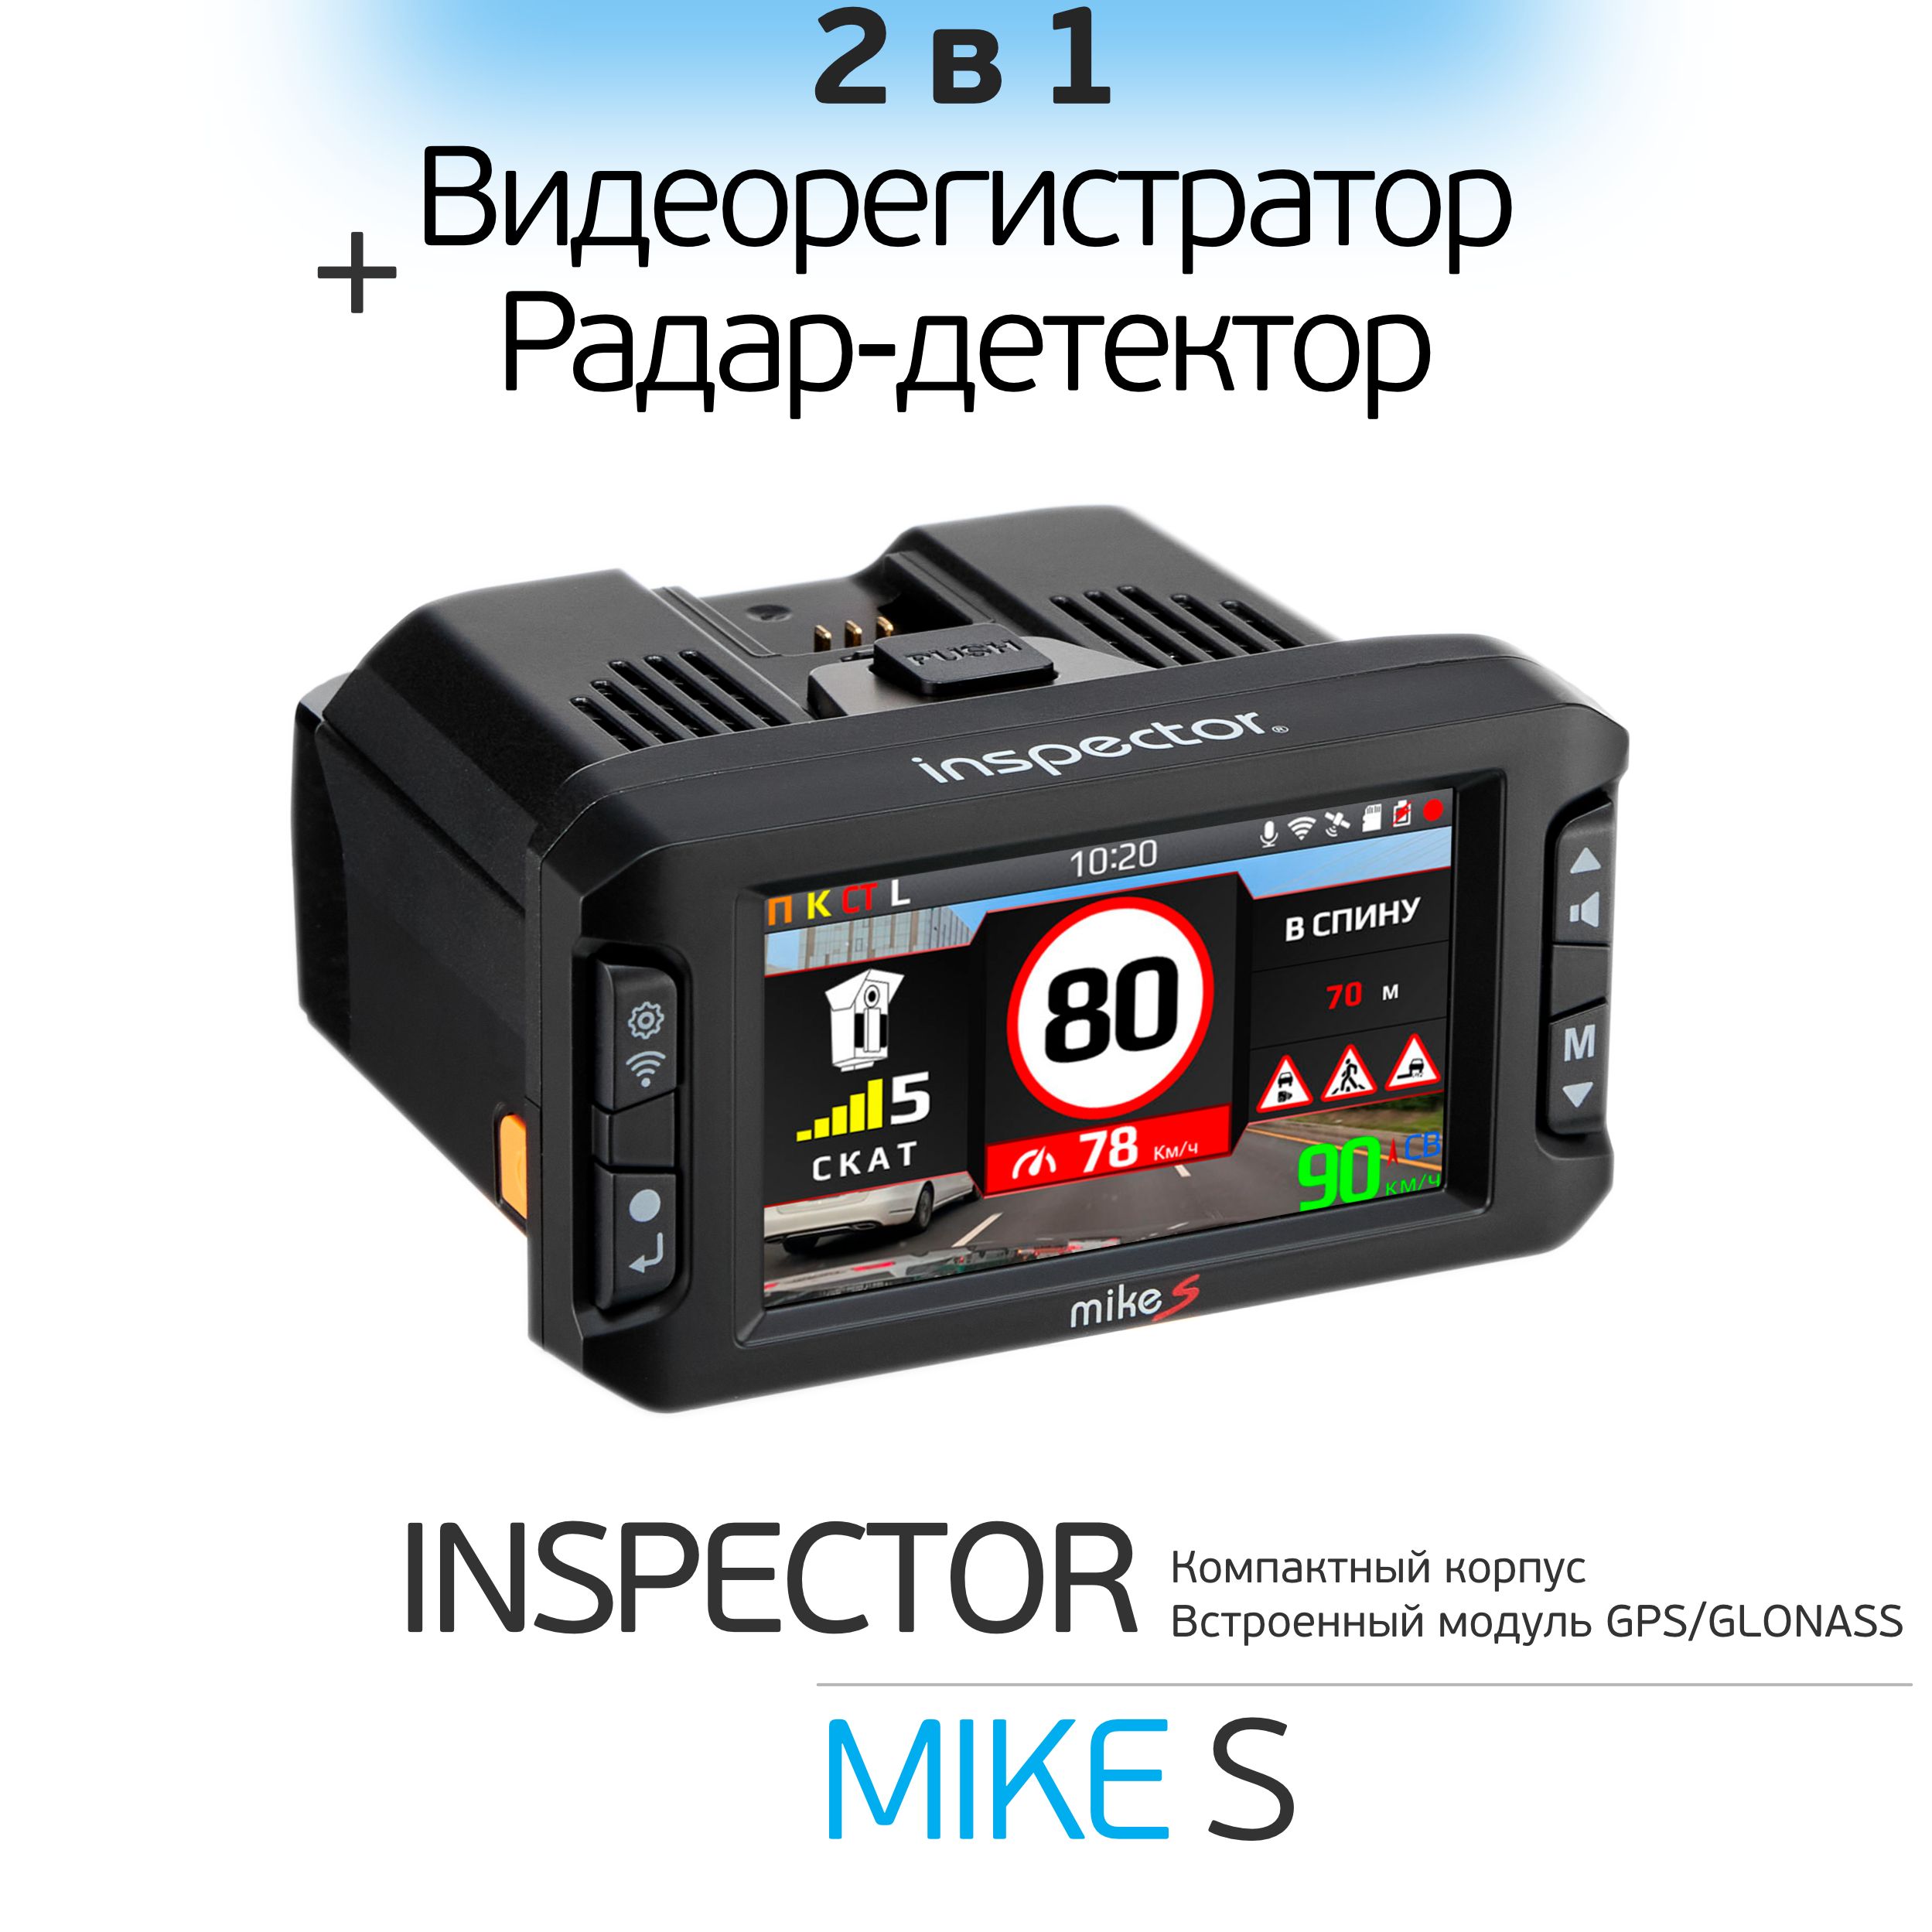 Inspector mikes. Видеорегистратор с радар-детектором Inspector Barracuda. Inspector Mike s.